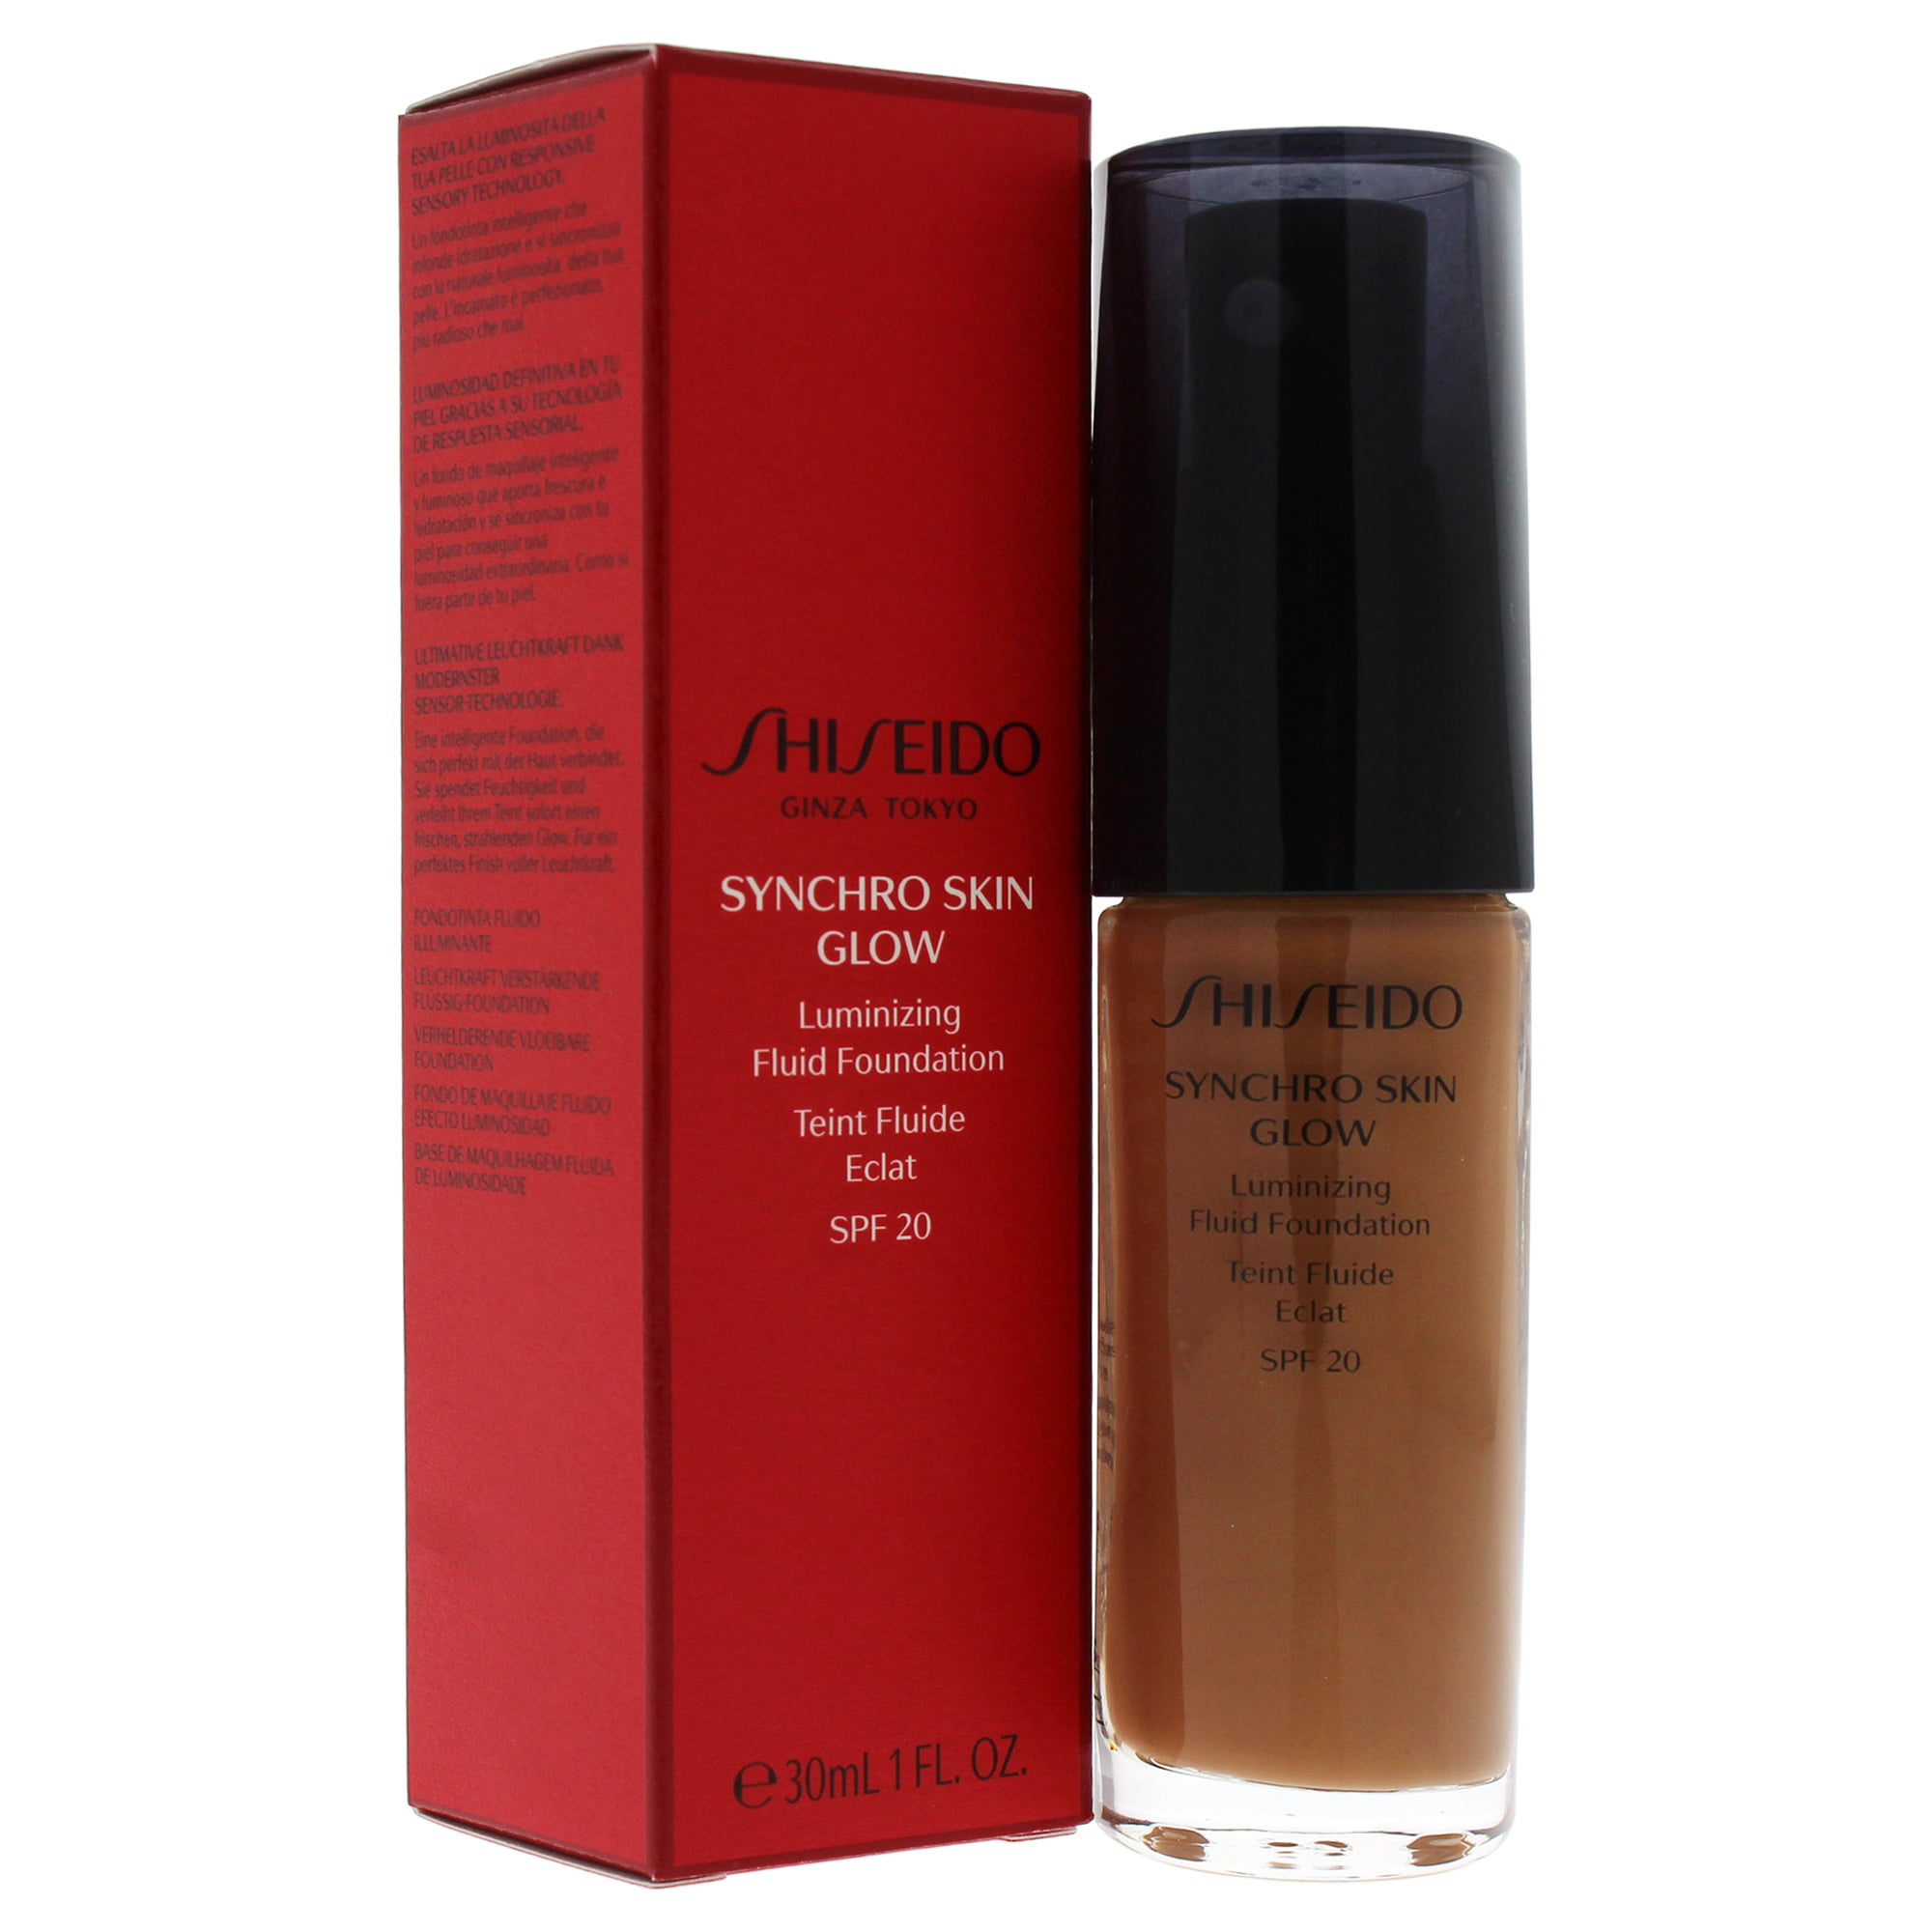 Shiseido Synchro Skin Glow. Shiseido Synchro Skin Glow Luminizing SPF 20 Rose 2. Шисейдо ревиталесенс скин Глоу отзывы. Shiseido флюид